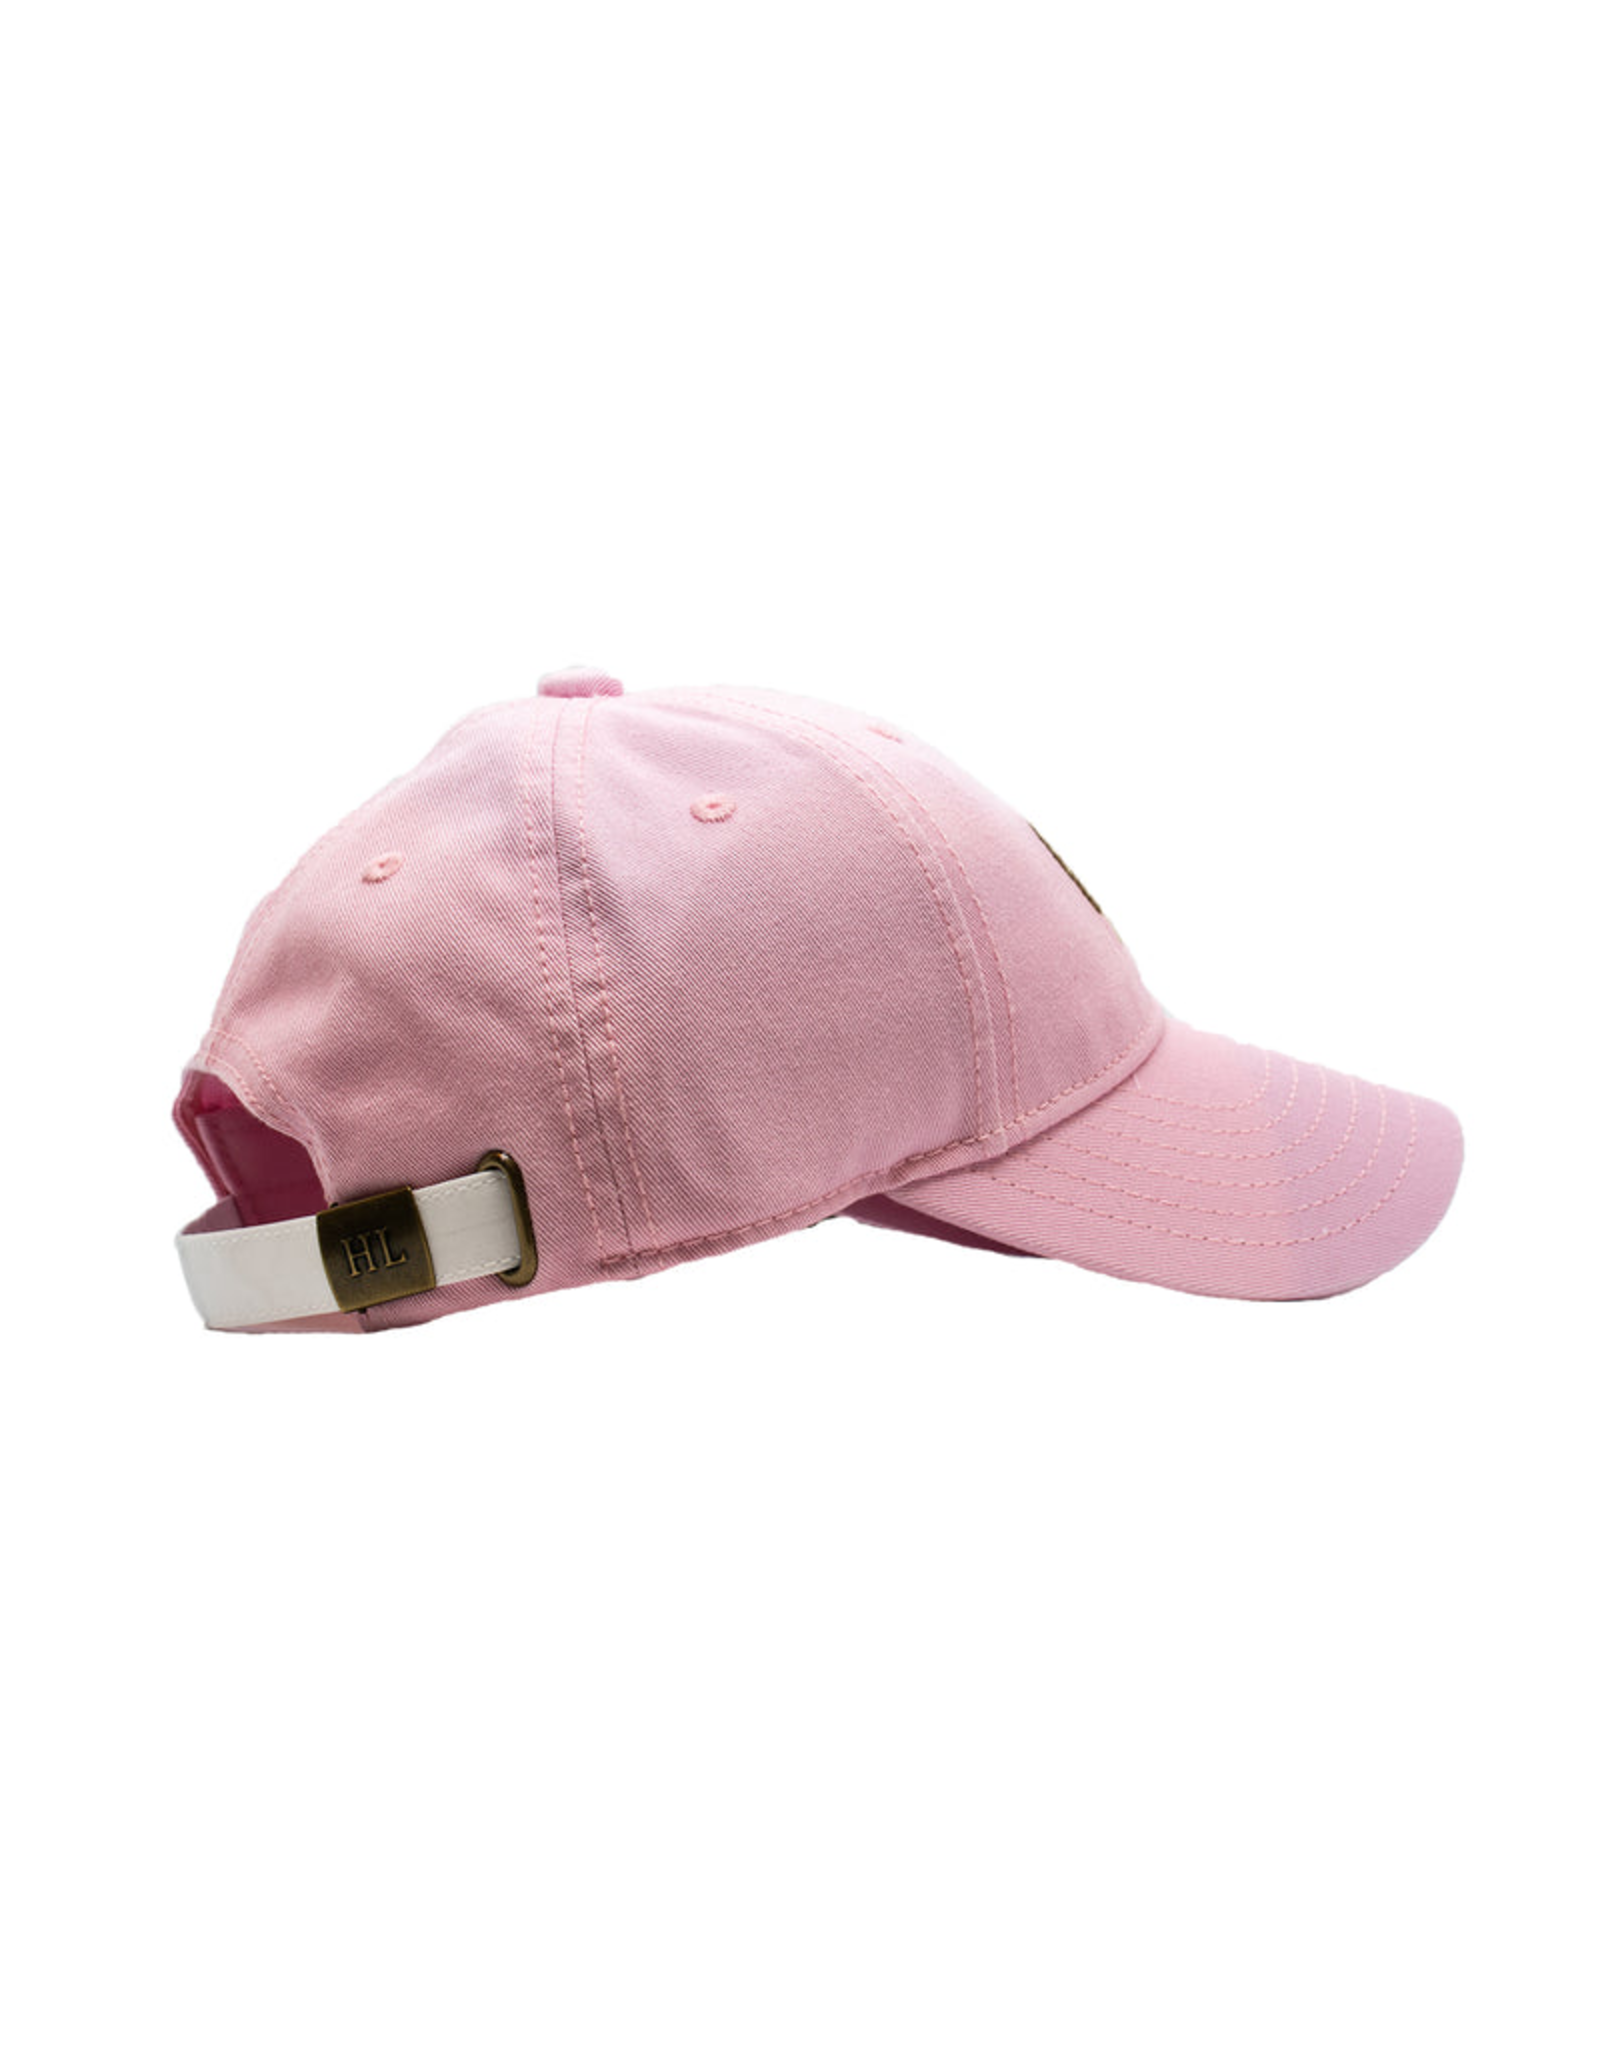 Harding Lane HL Embroidered Hat Pink Unicorn